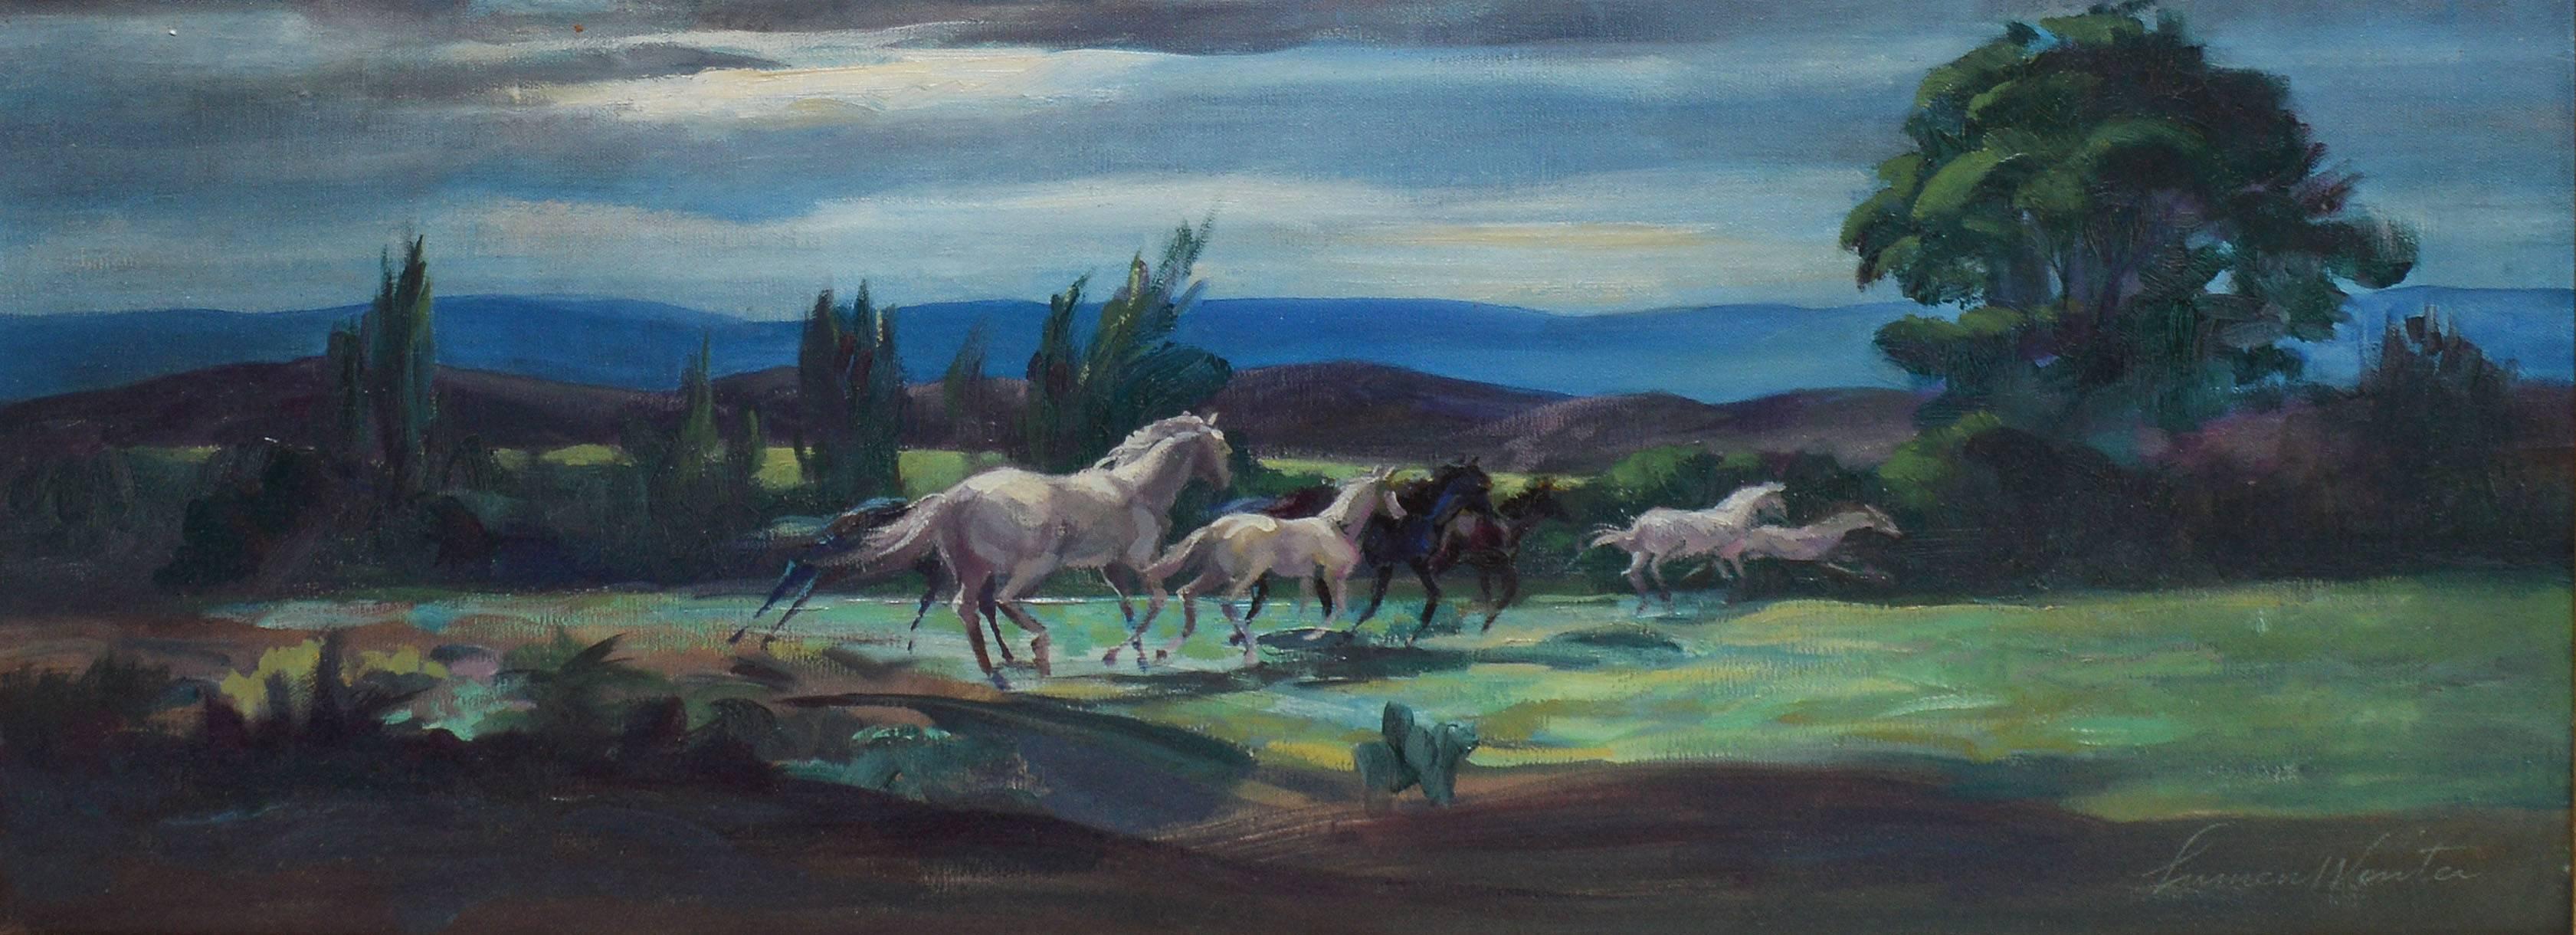 Wild Horses by Lumen Winter 1